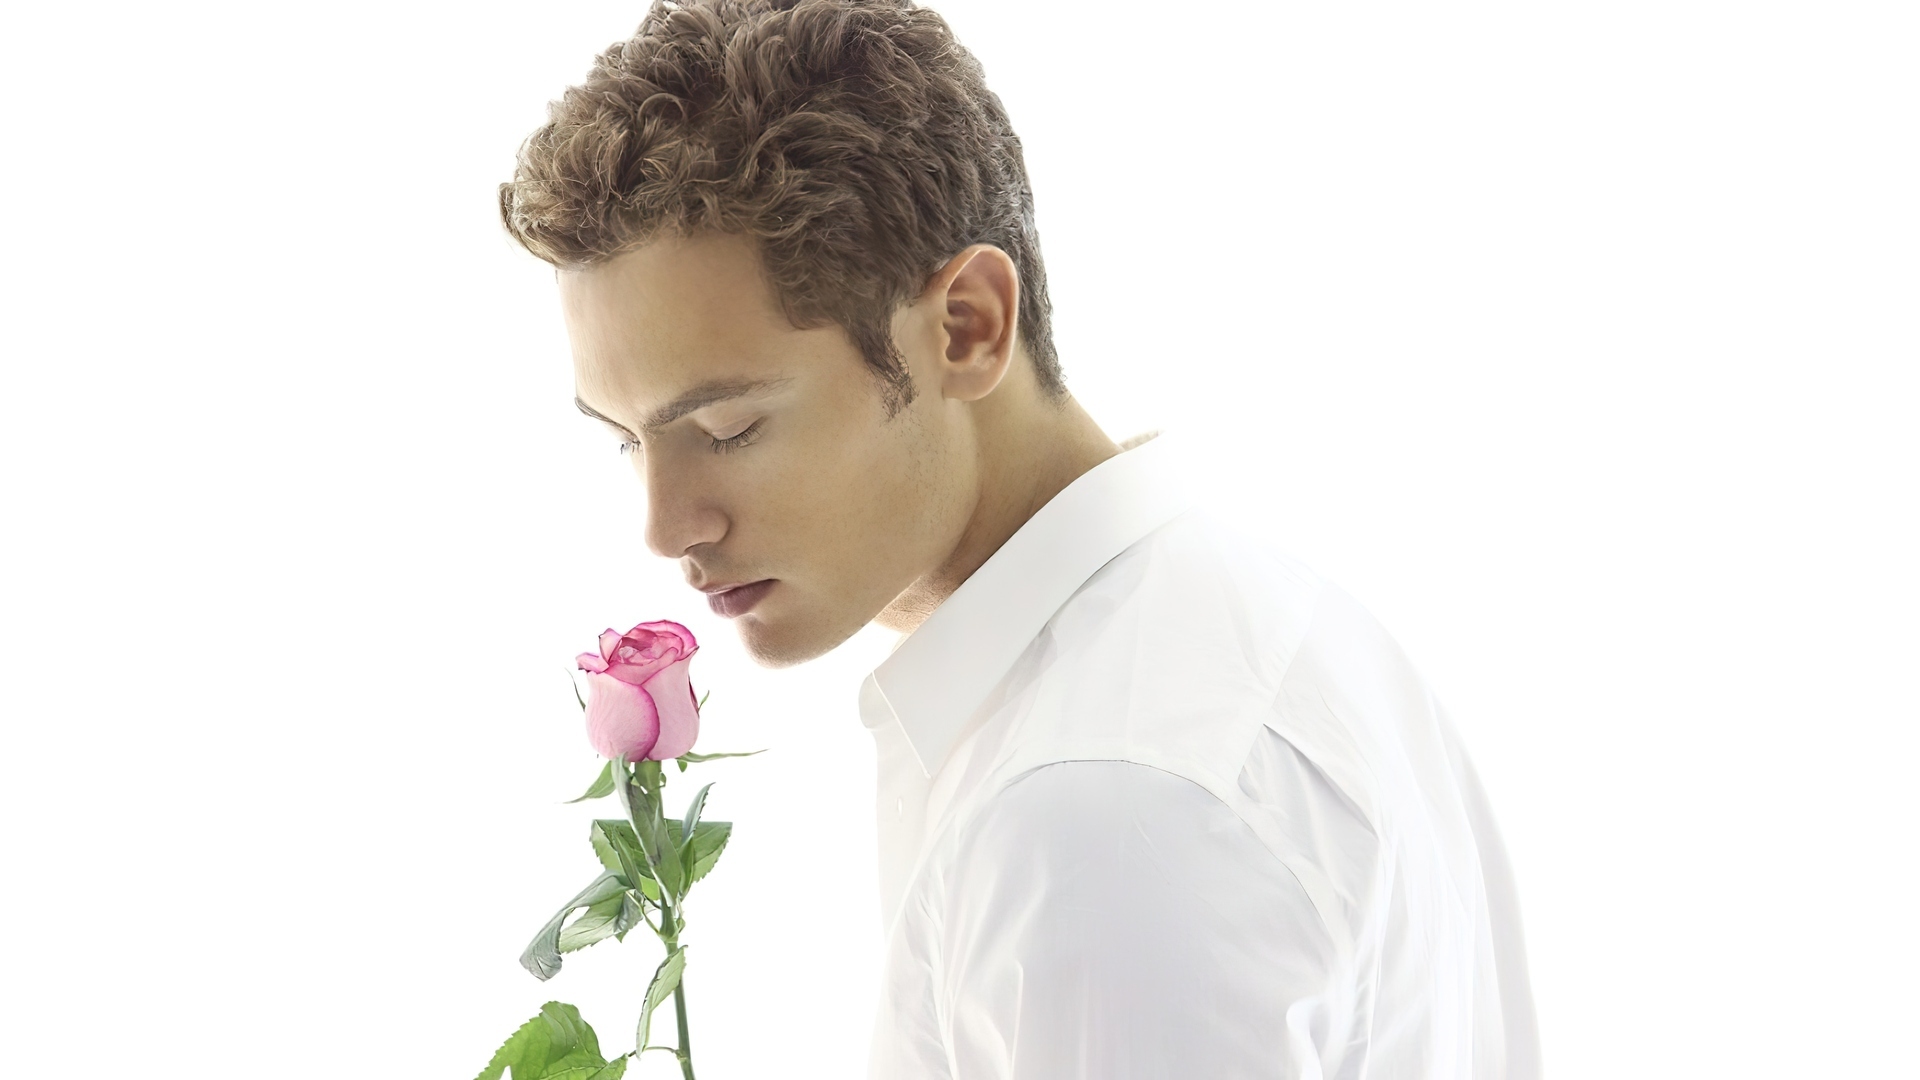 Man romance. Букет для мужчины. Мужчина с розой. Красивый мужчина с цветами. Романтик для парня.